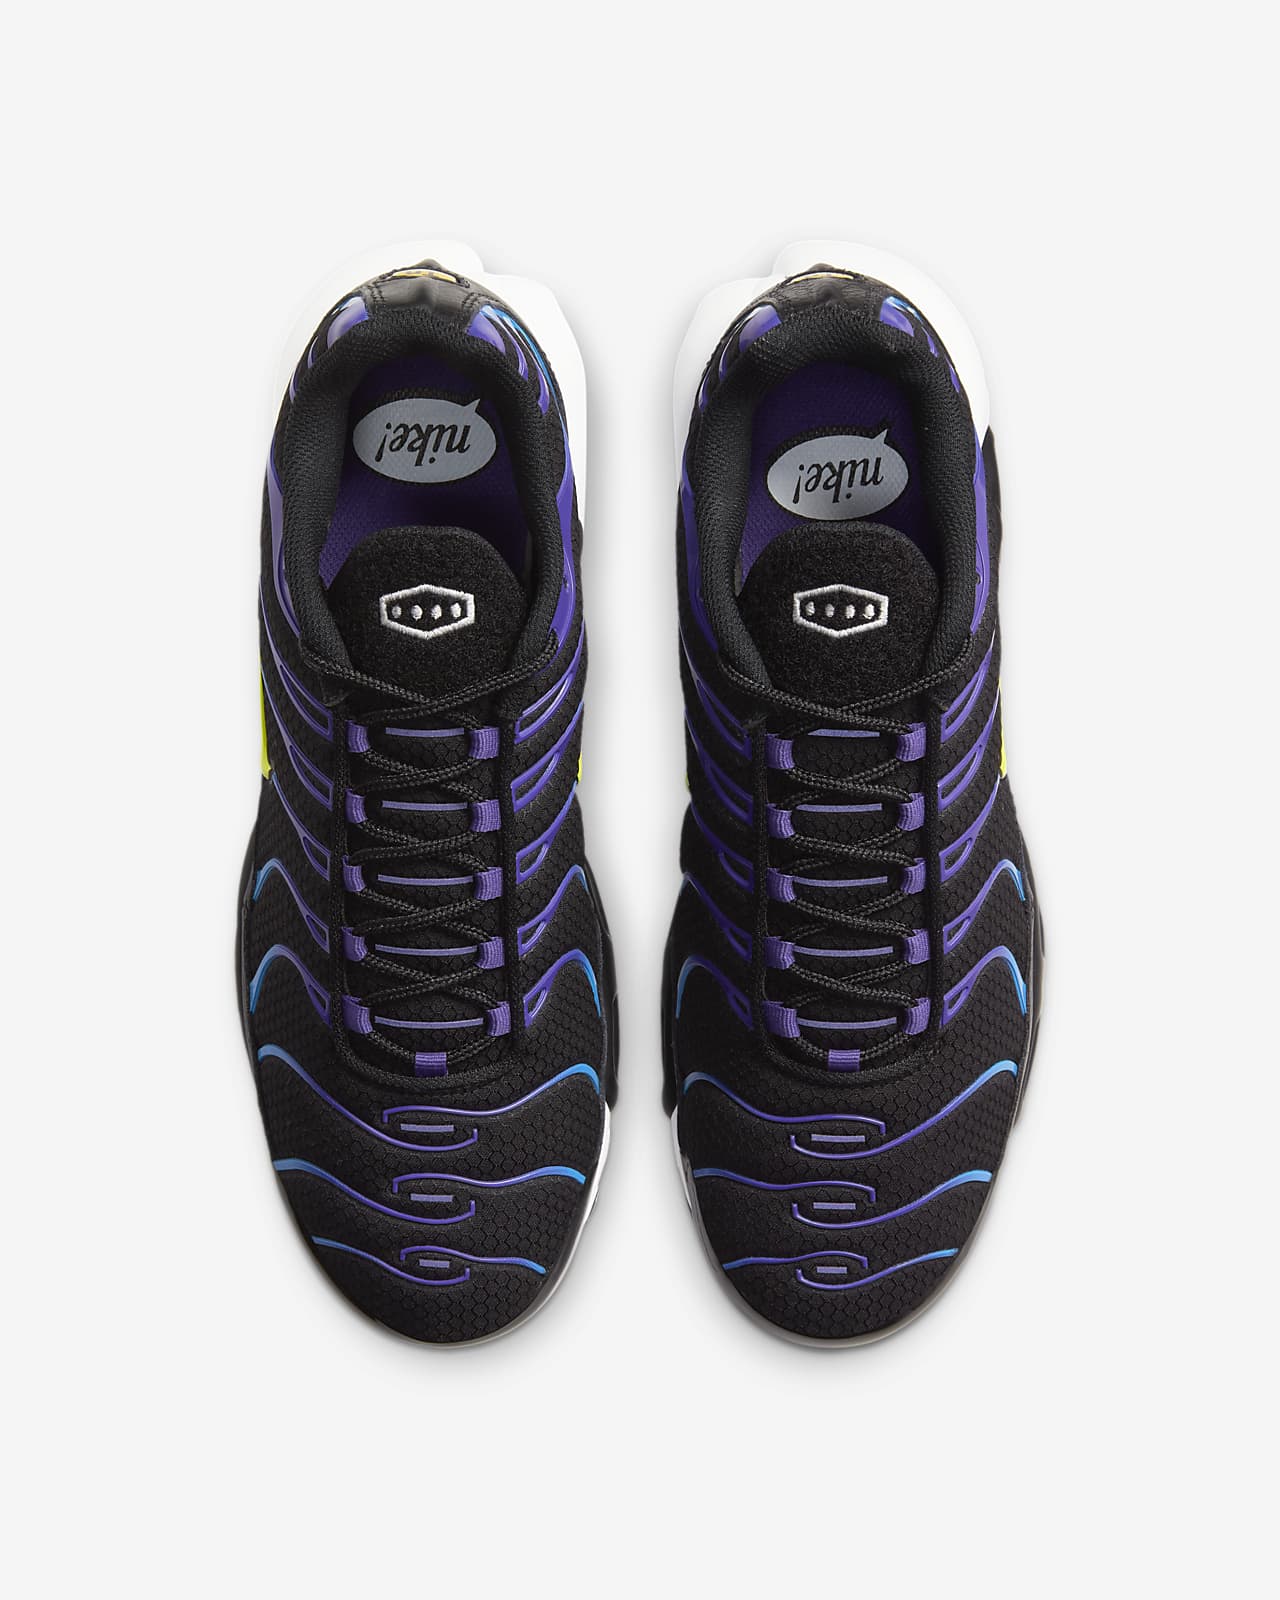 nike air max plus sneakers purple